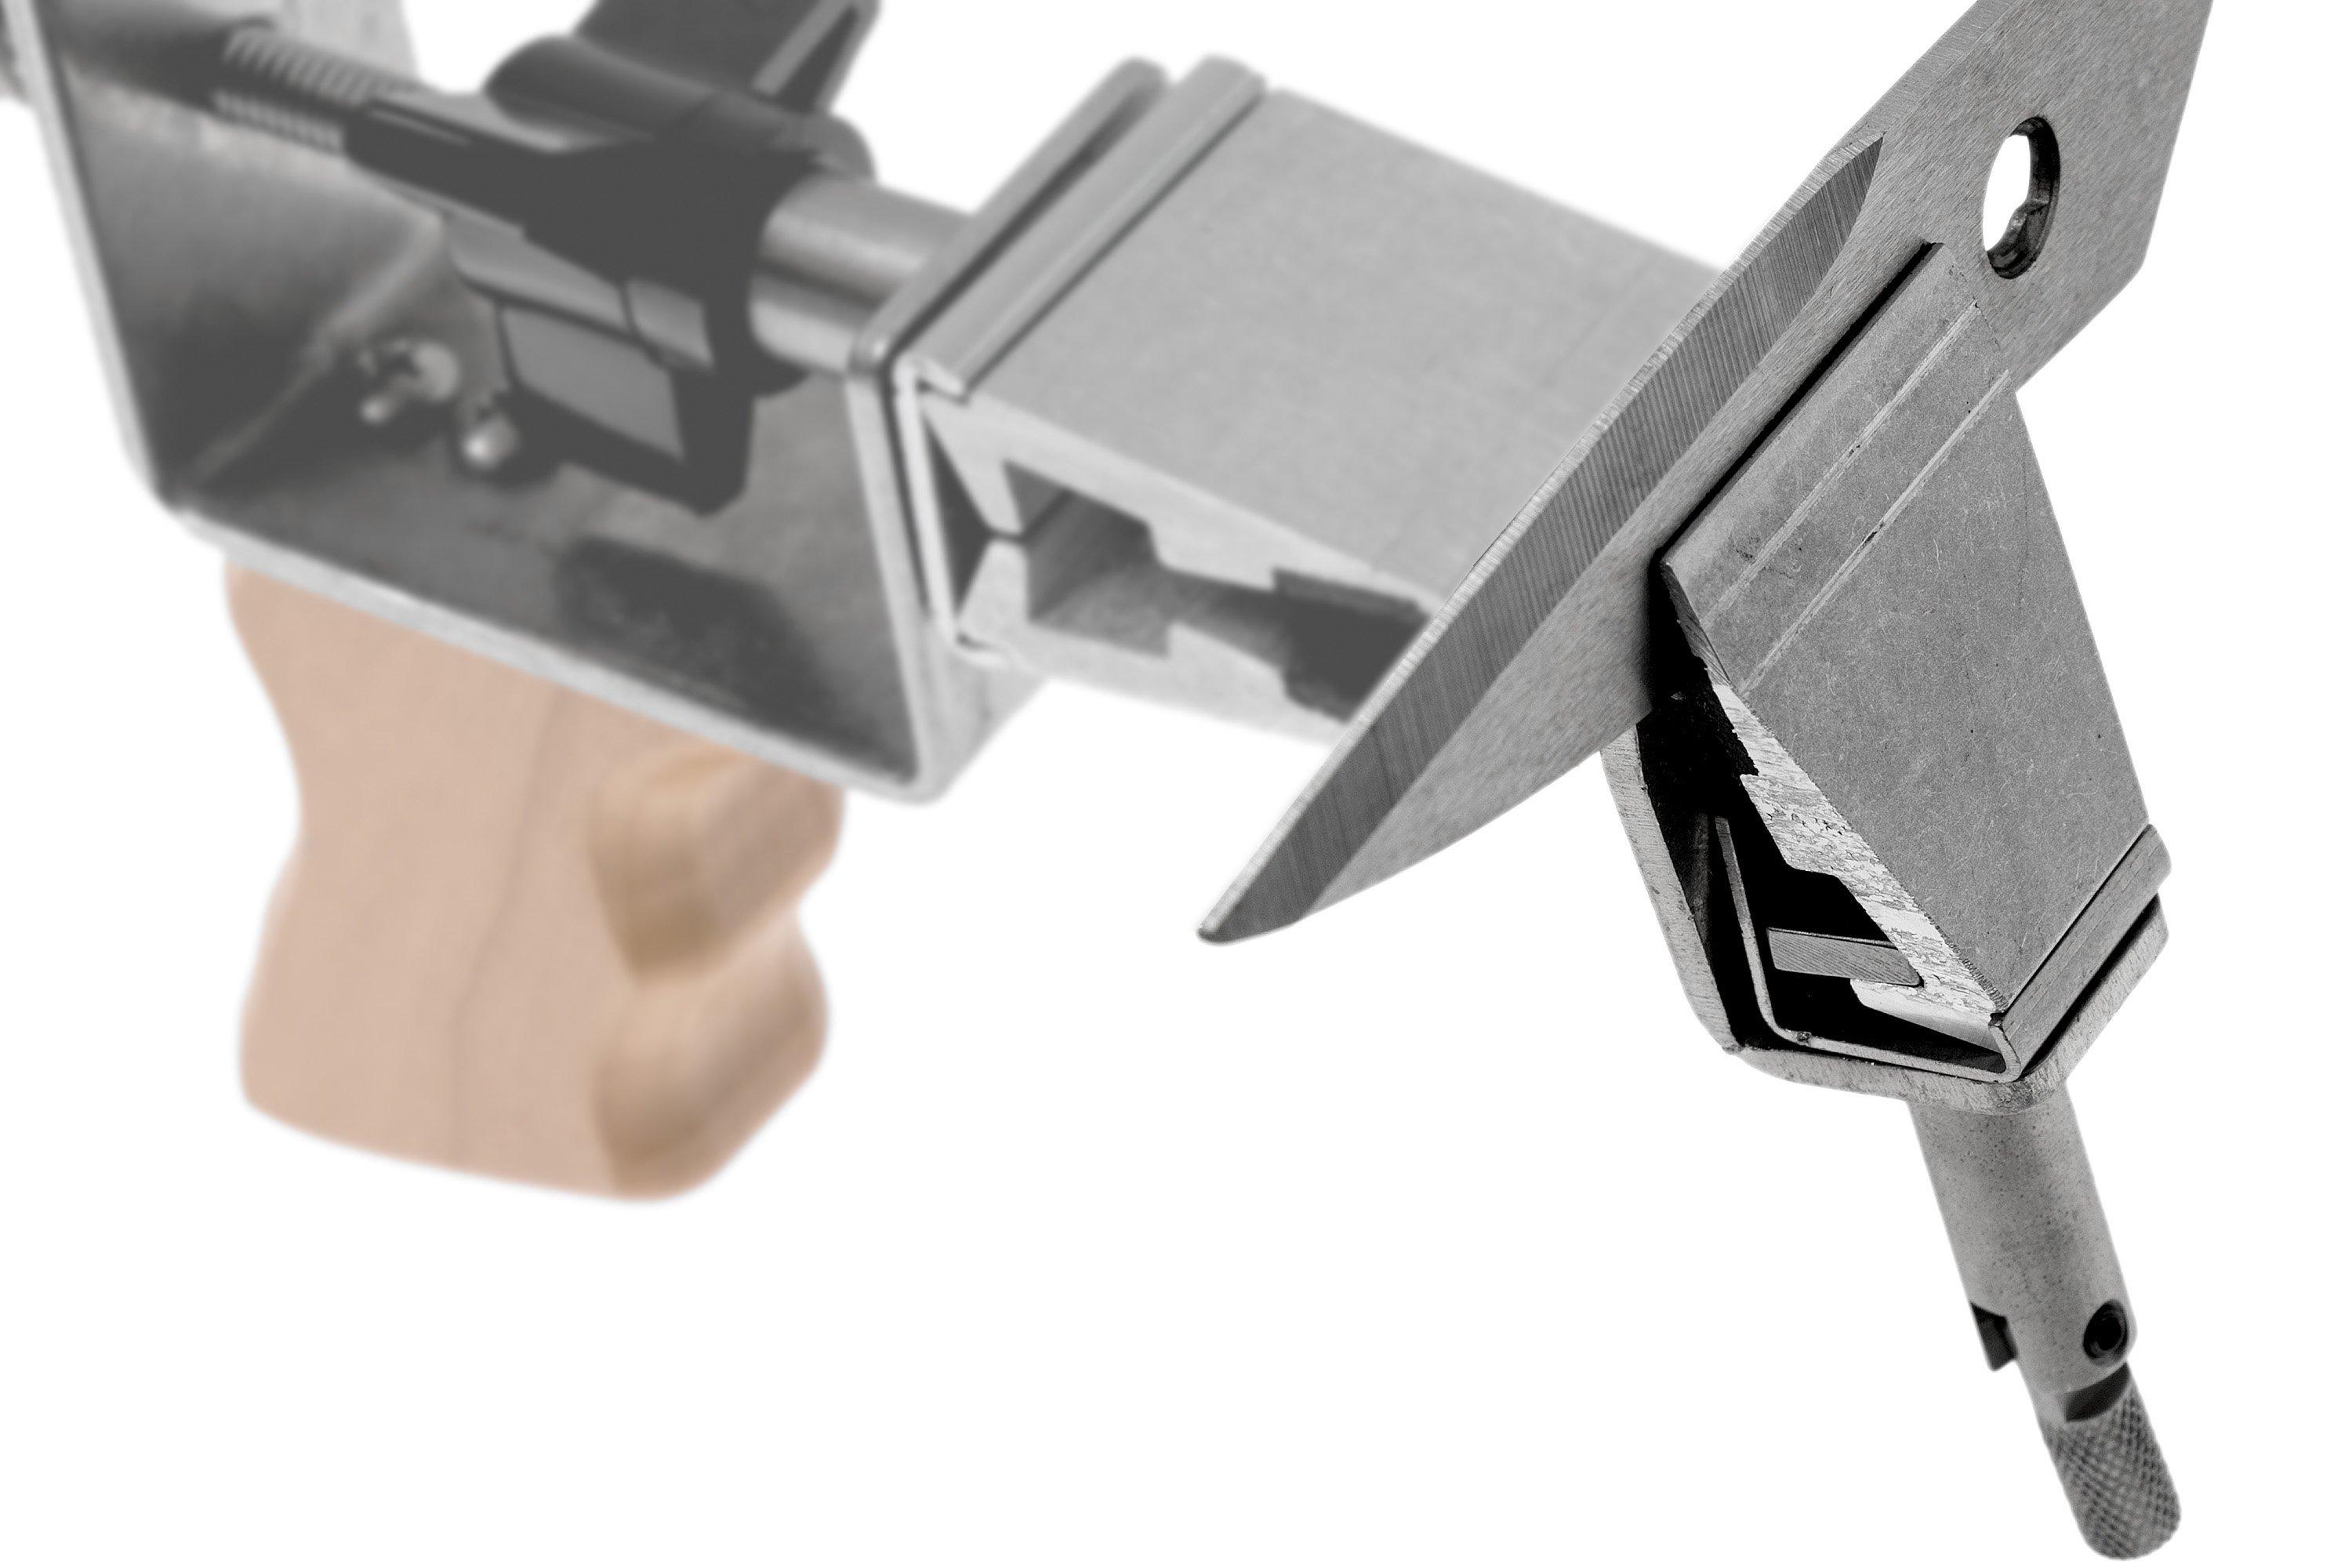 KME attachment to sharpen scissors, SCR-Sharpener